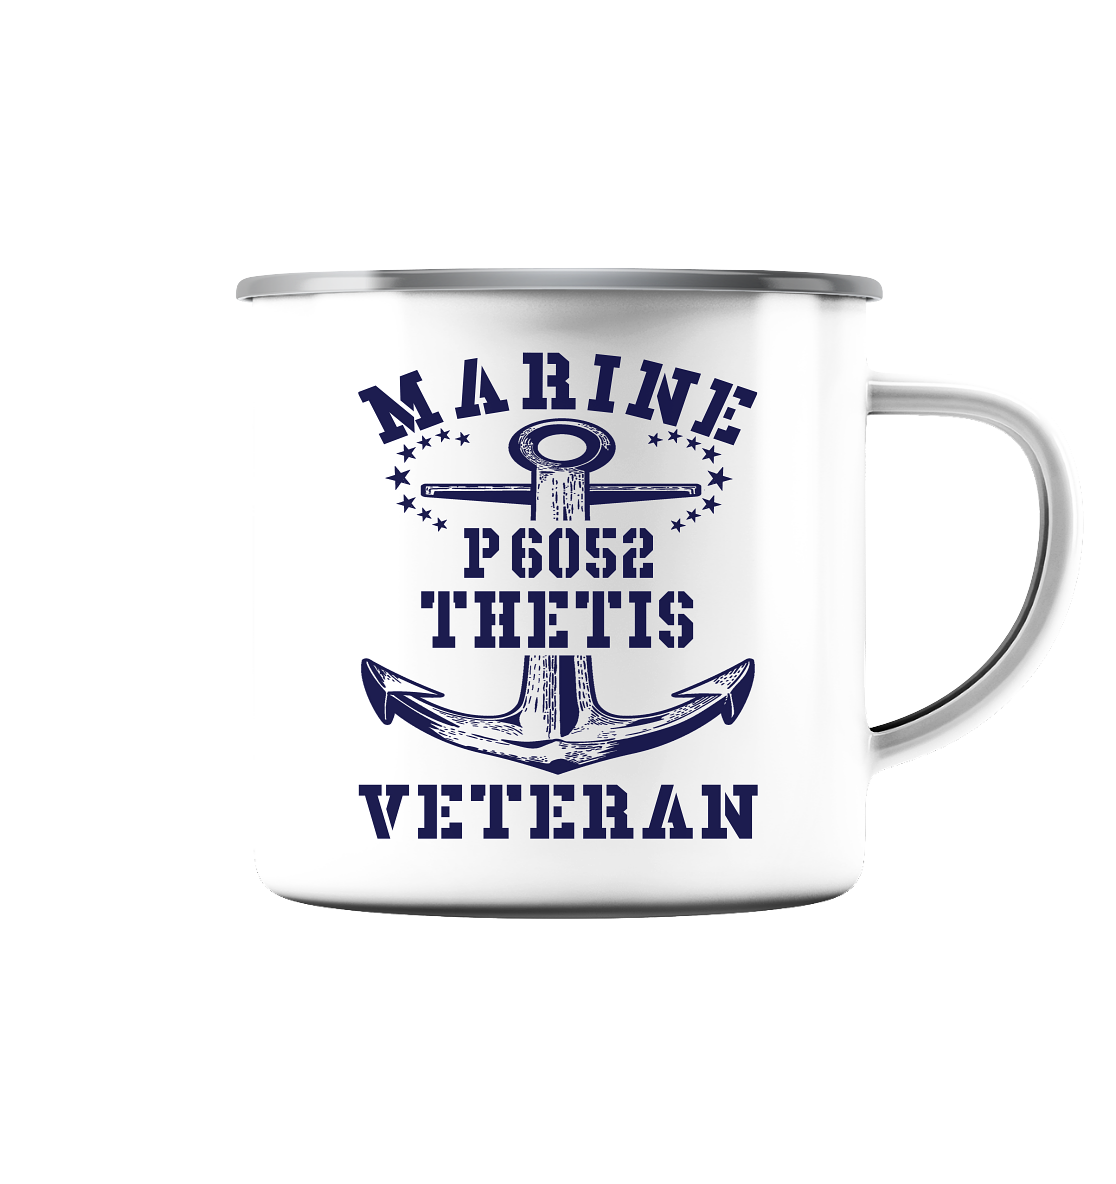 U-Jagdboot P6052 THETIS Marine Veteran - Emaille Tasse (Silber)